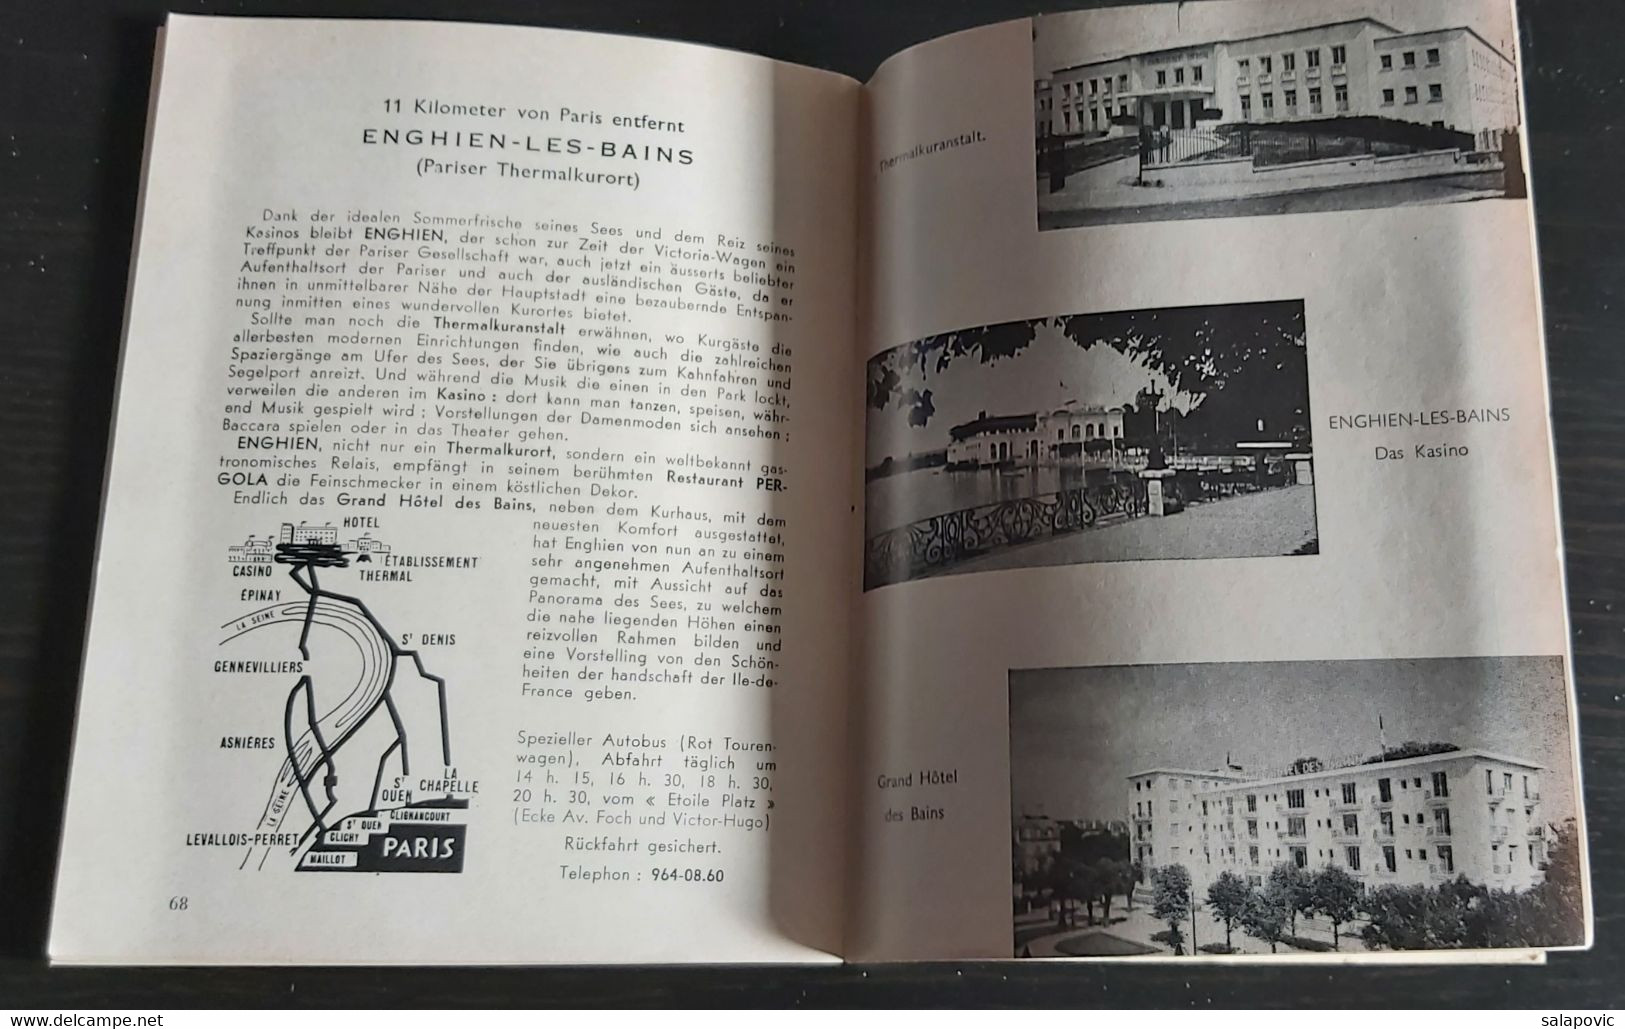 Illustrated guide, Ilustrierter führer Paris und Seine Umgebung, Paris and its surroundings